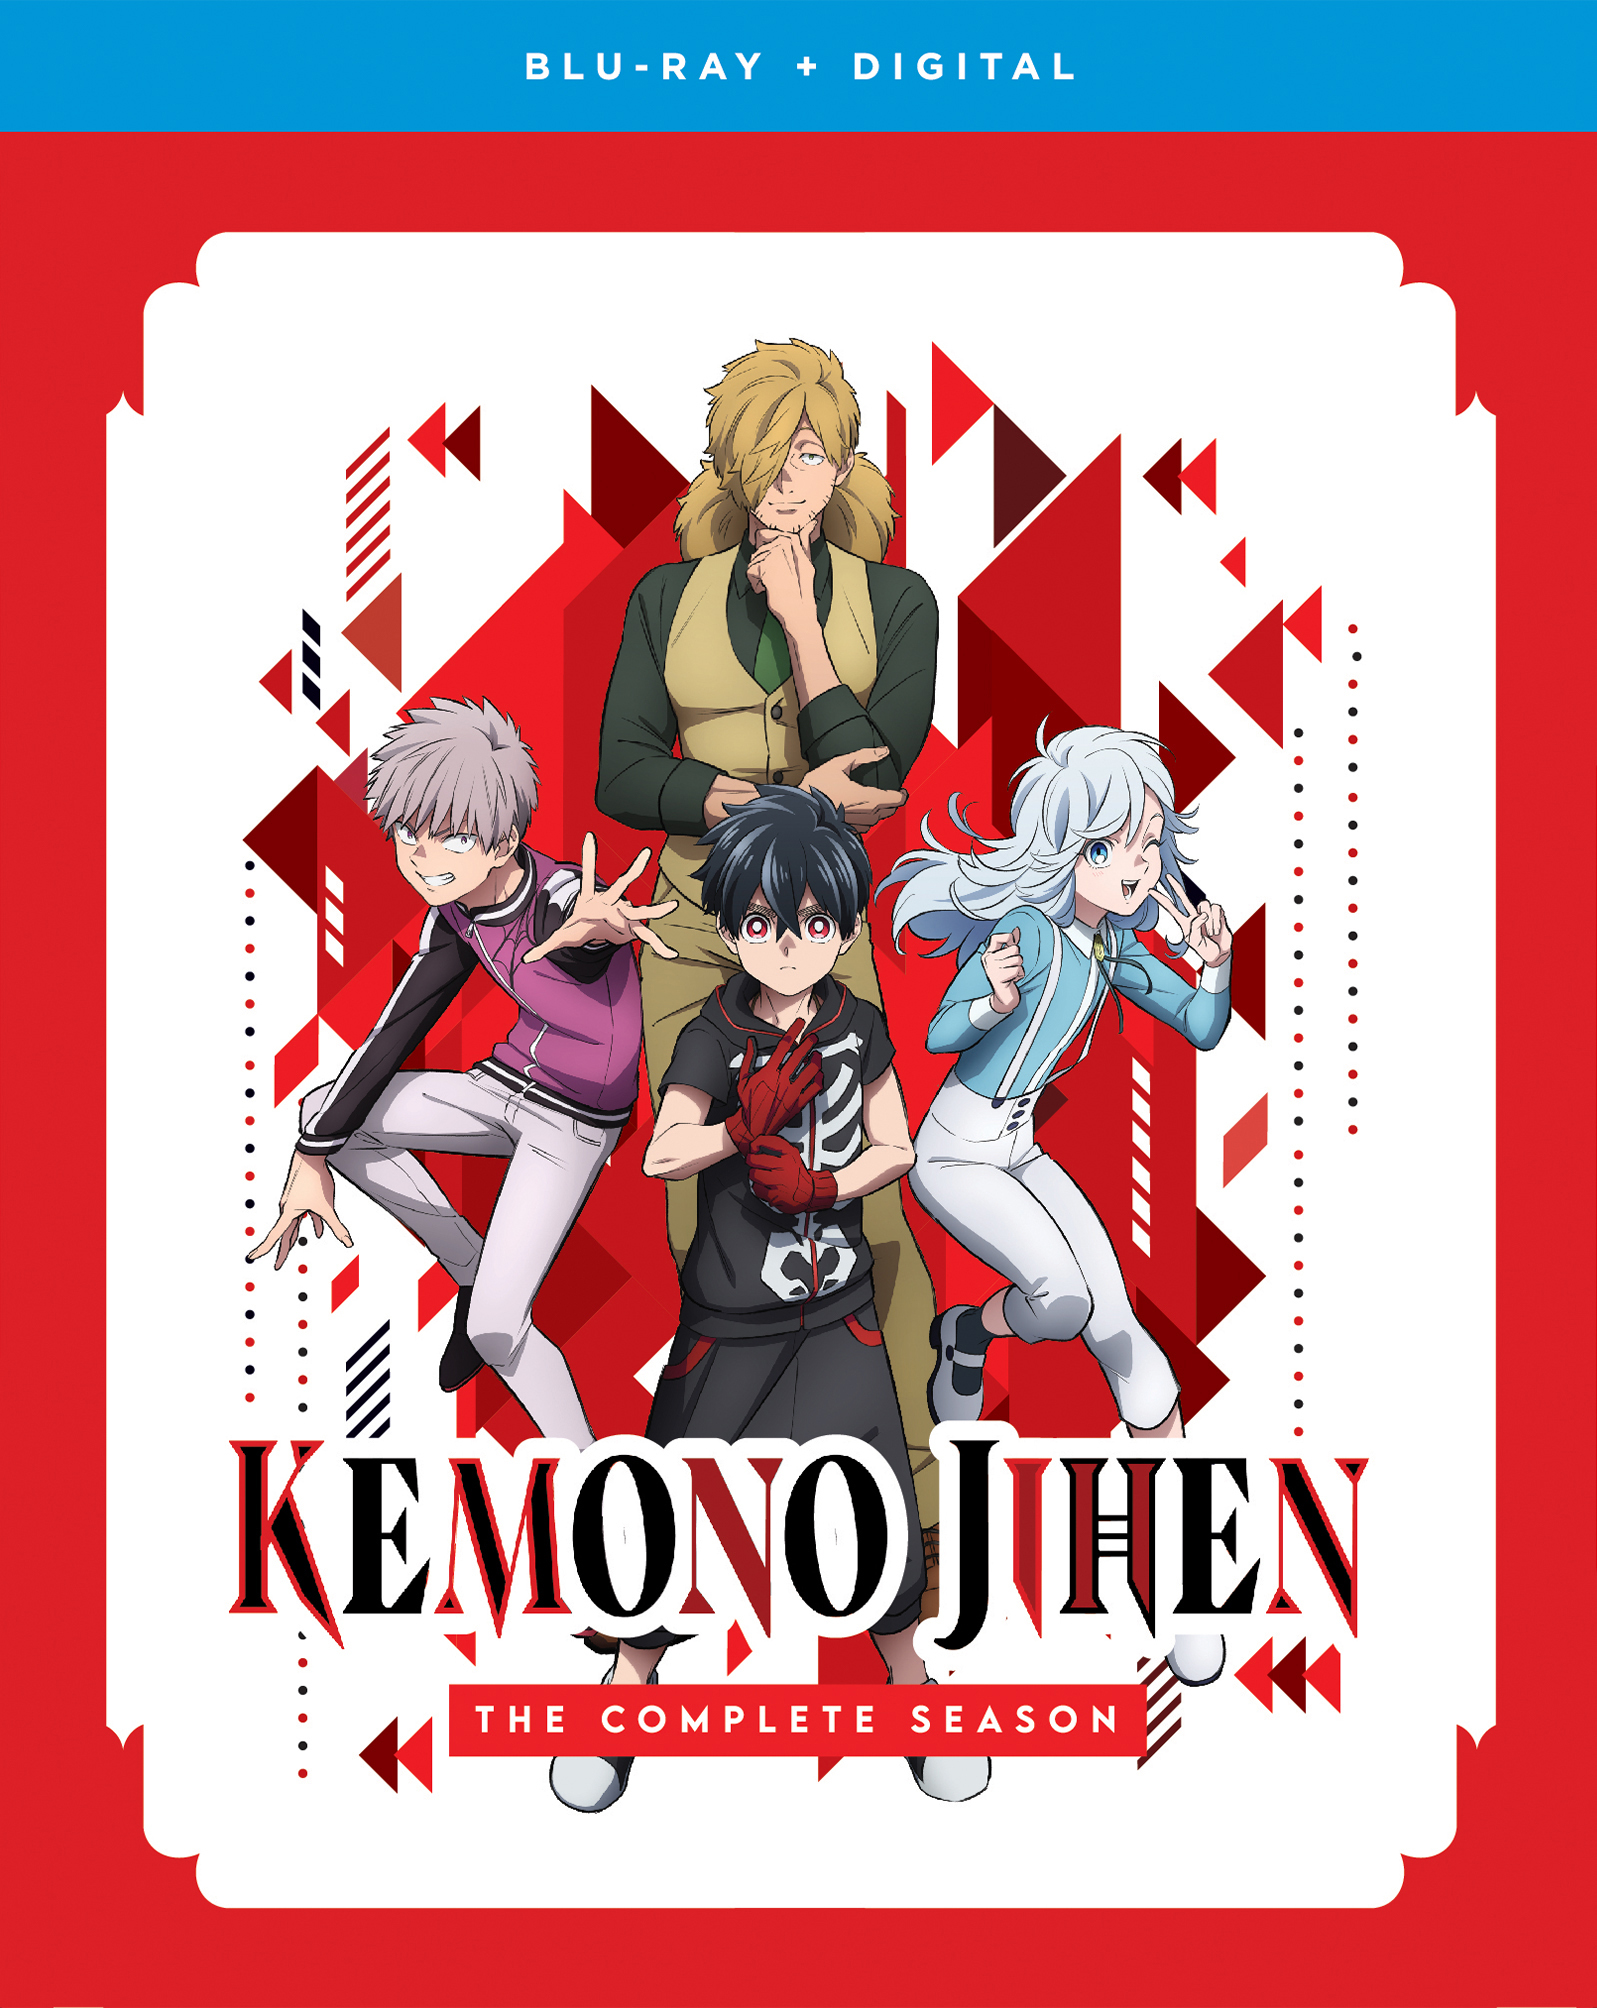 

Kemono Jihen: The Complete Season [Blu-ray] [2 Discs]